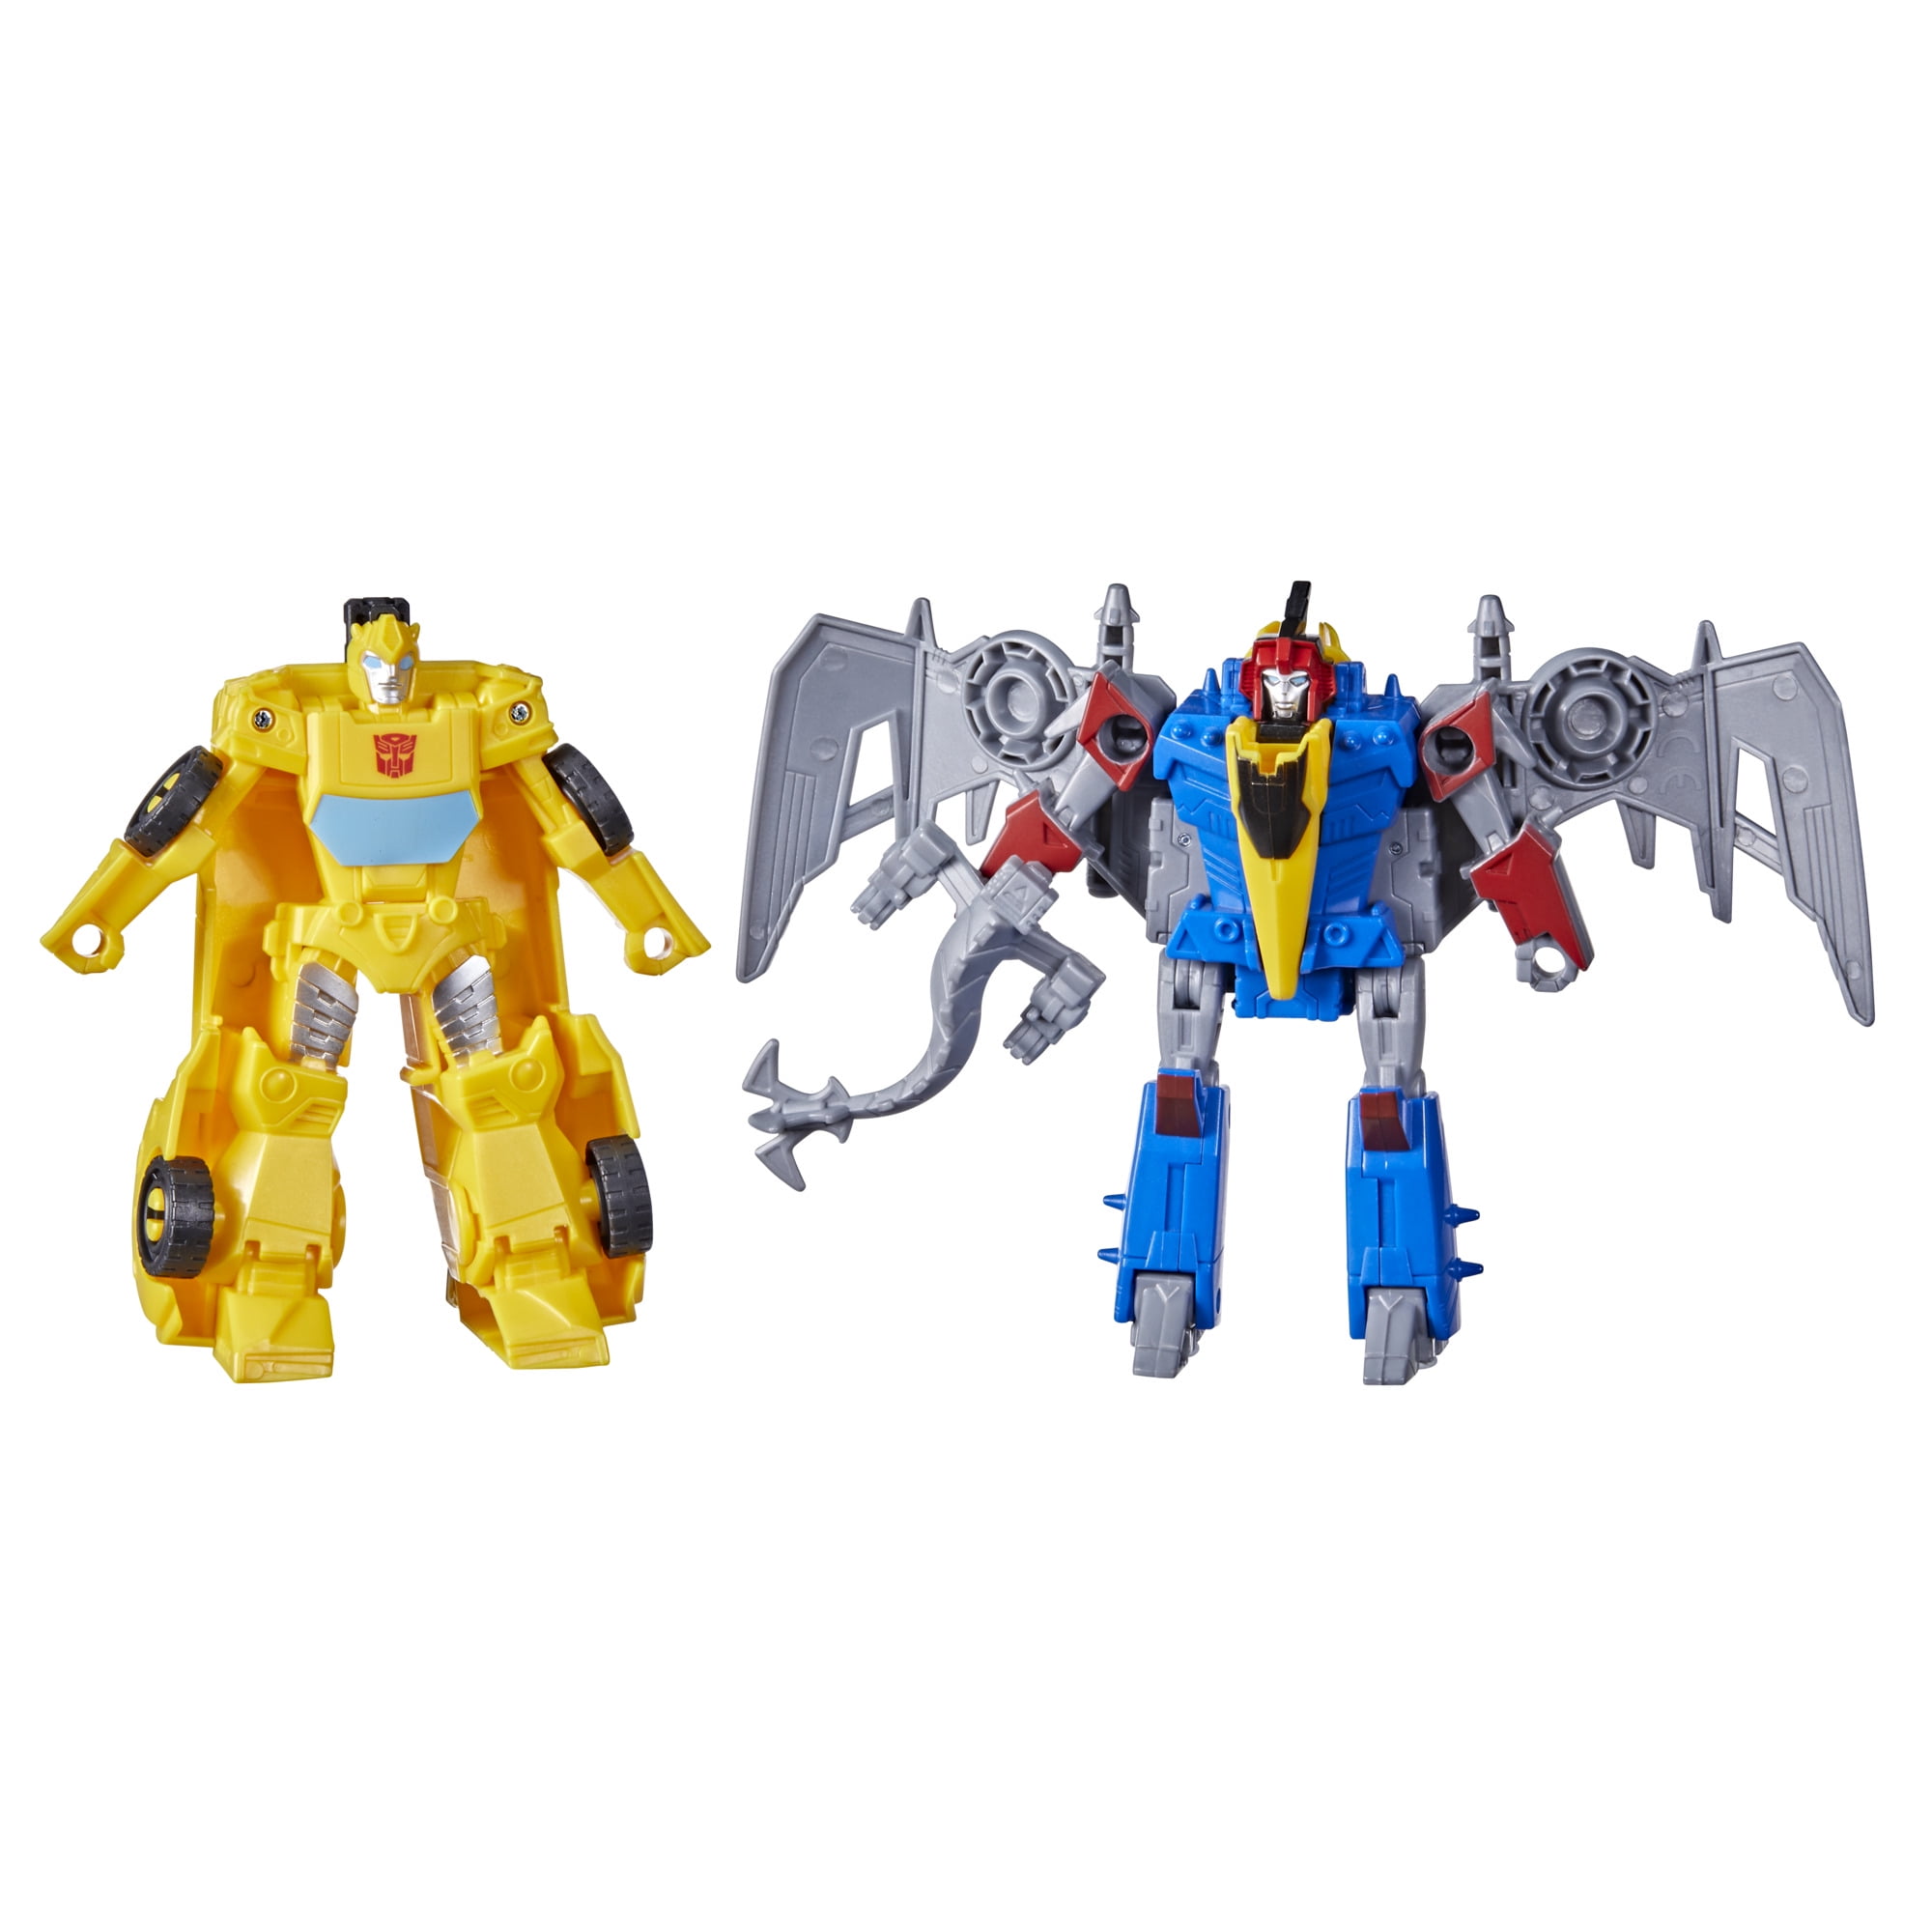 Hasbro Transformers Bumblebee Dinner Set Multicolored 3-Piece 